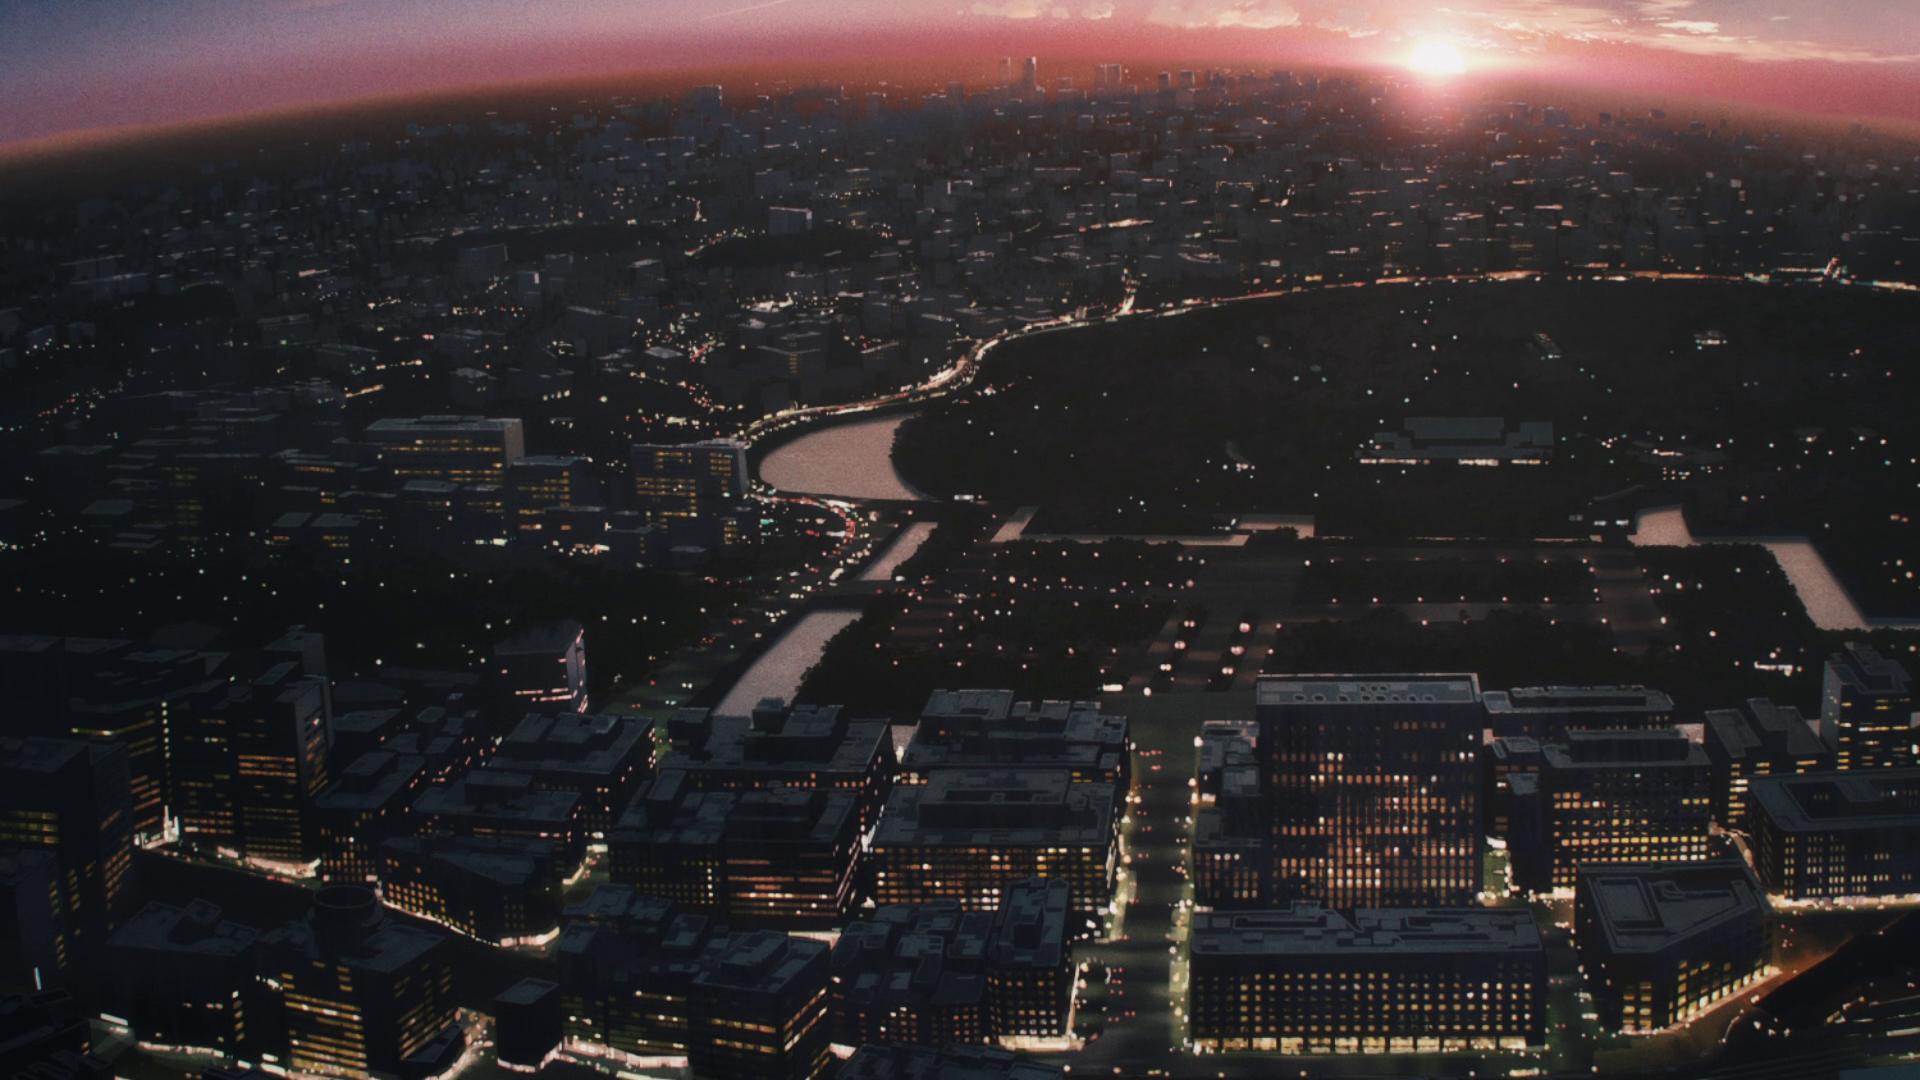 Anime 1920x1080 Chainsaw Man anime screenshot anime city city lights city cityscape